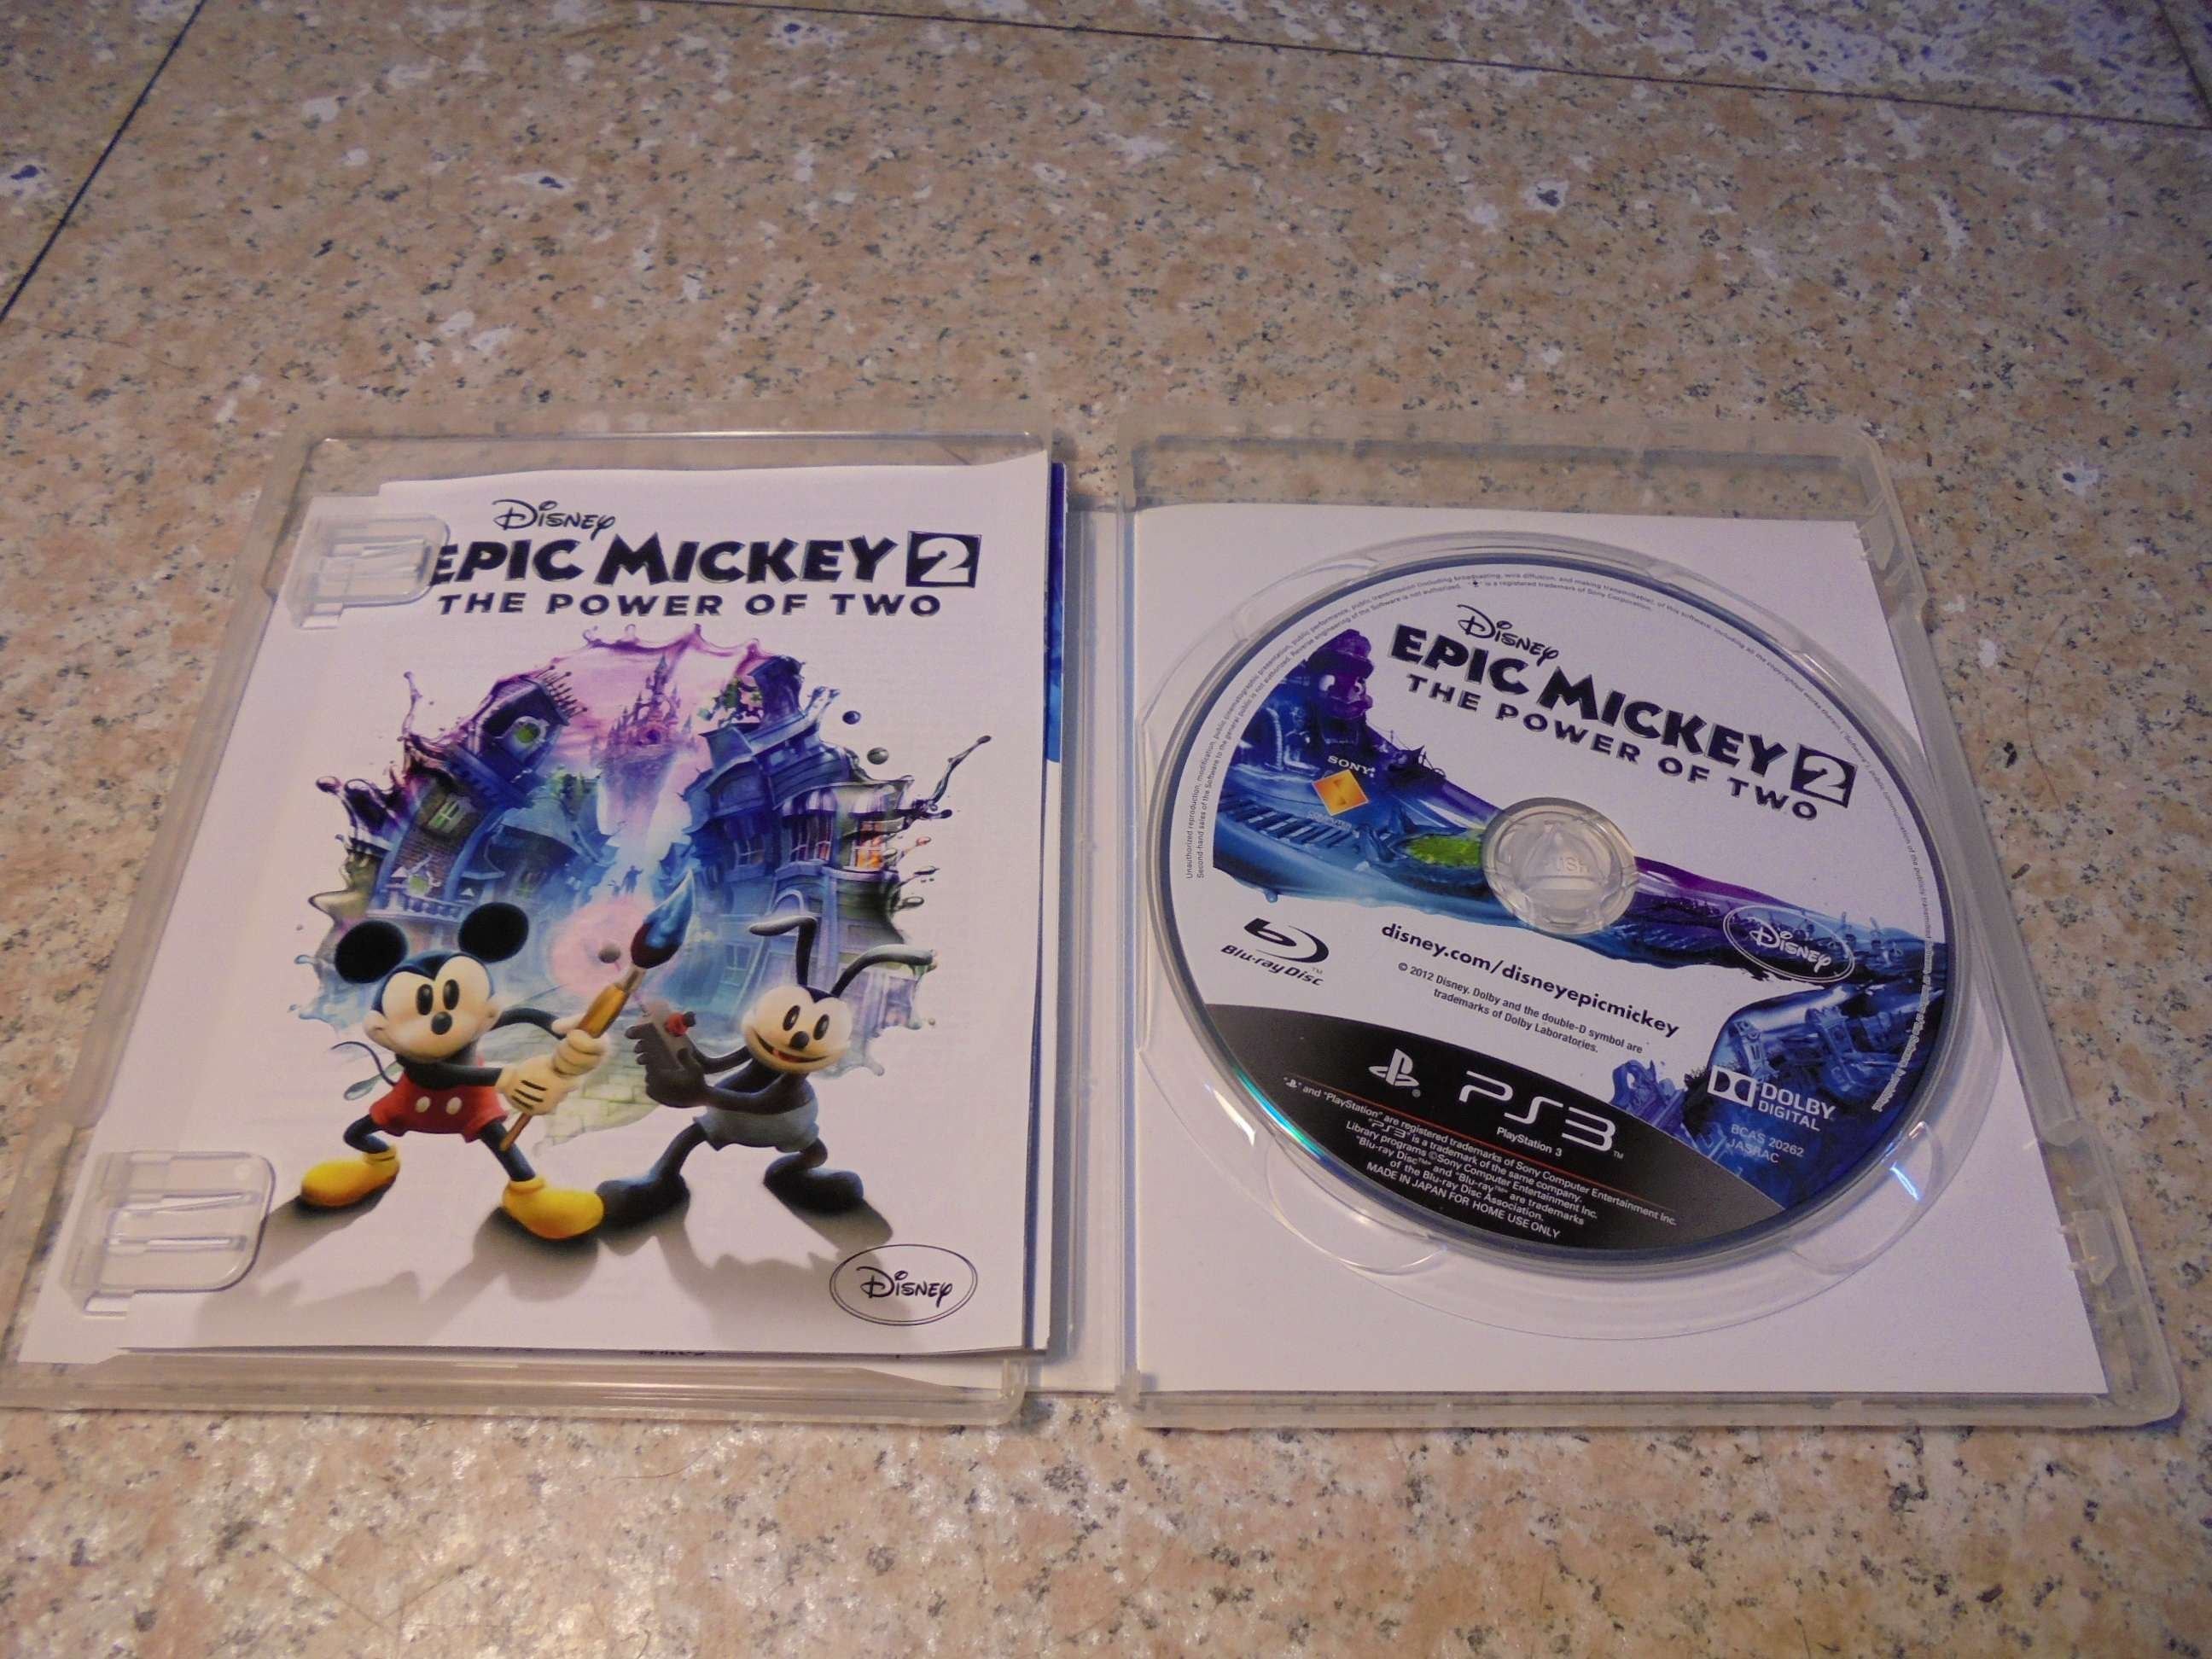 PS3 傳奇米奇2-二人之力 Epic Mickey 2 英文版 直購價800元 桃園《蝦米小鋪》